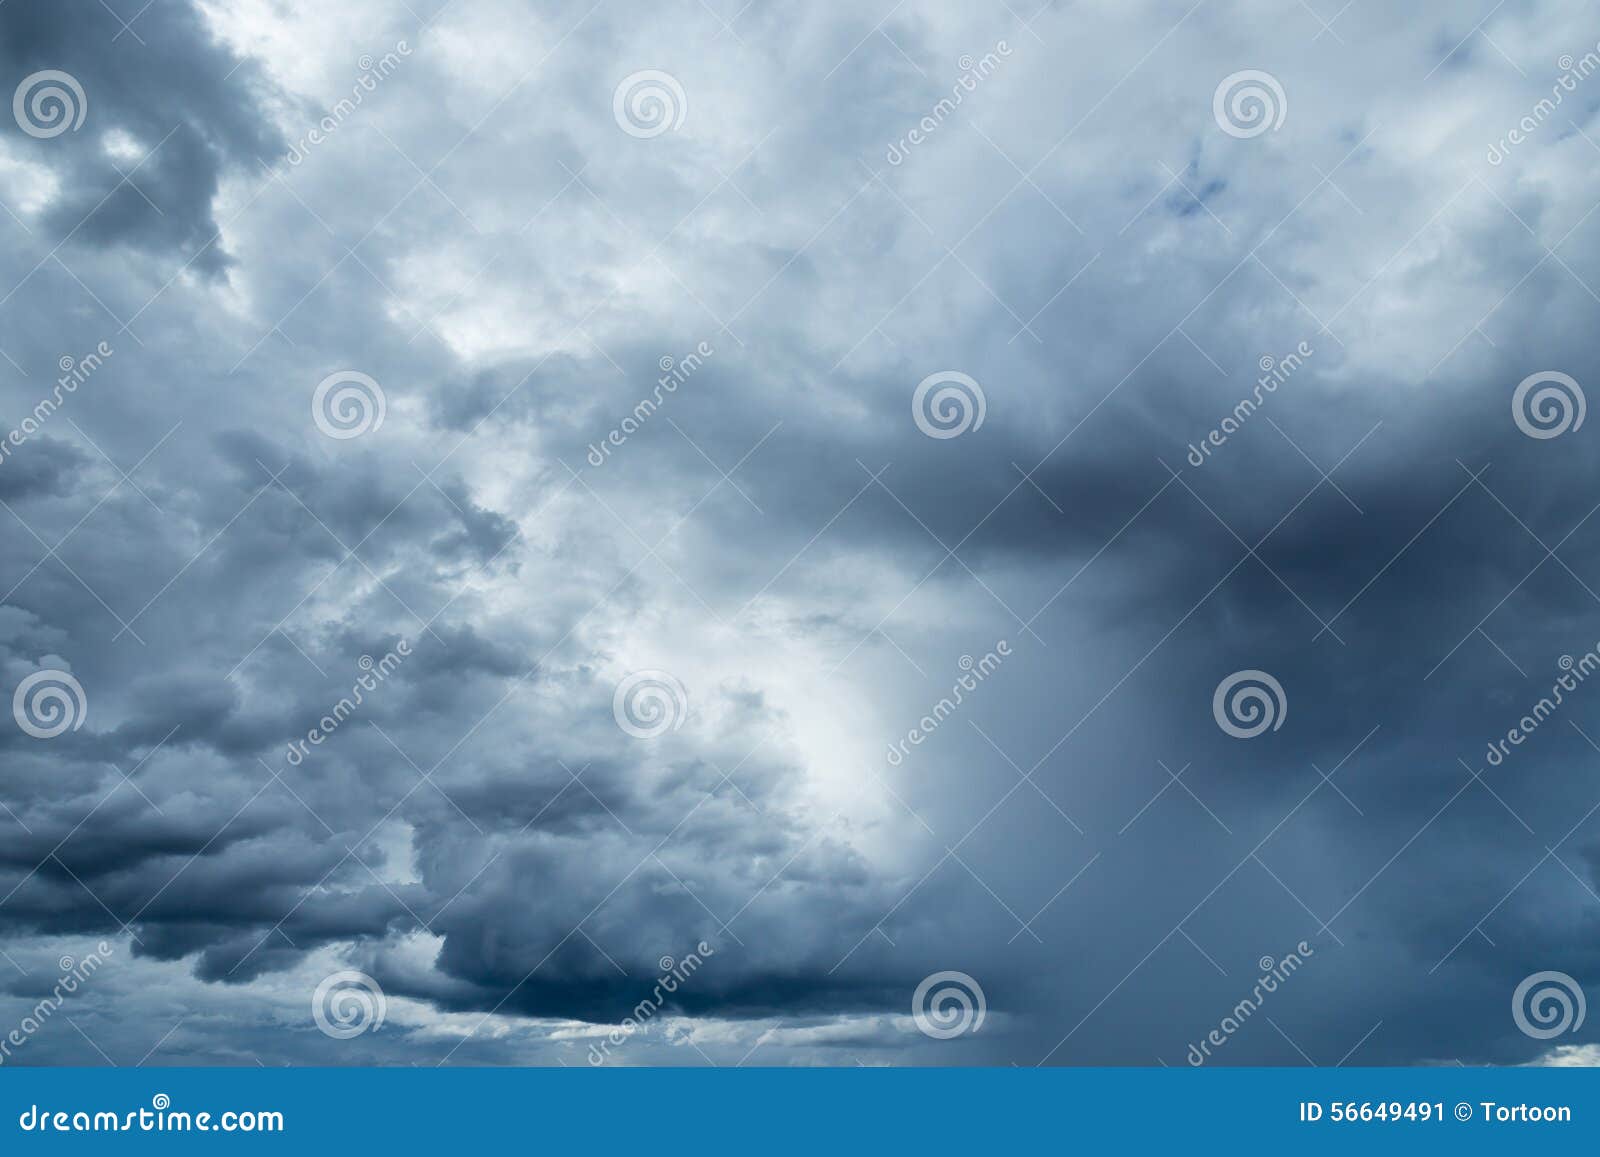 rainclouds or nimbus